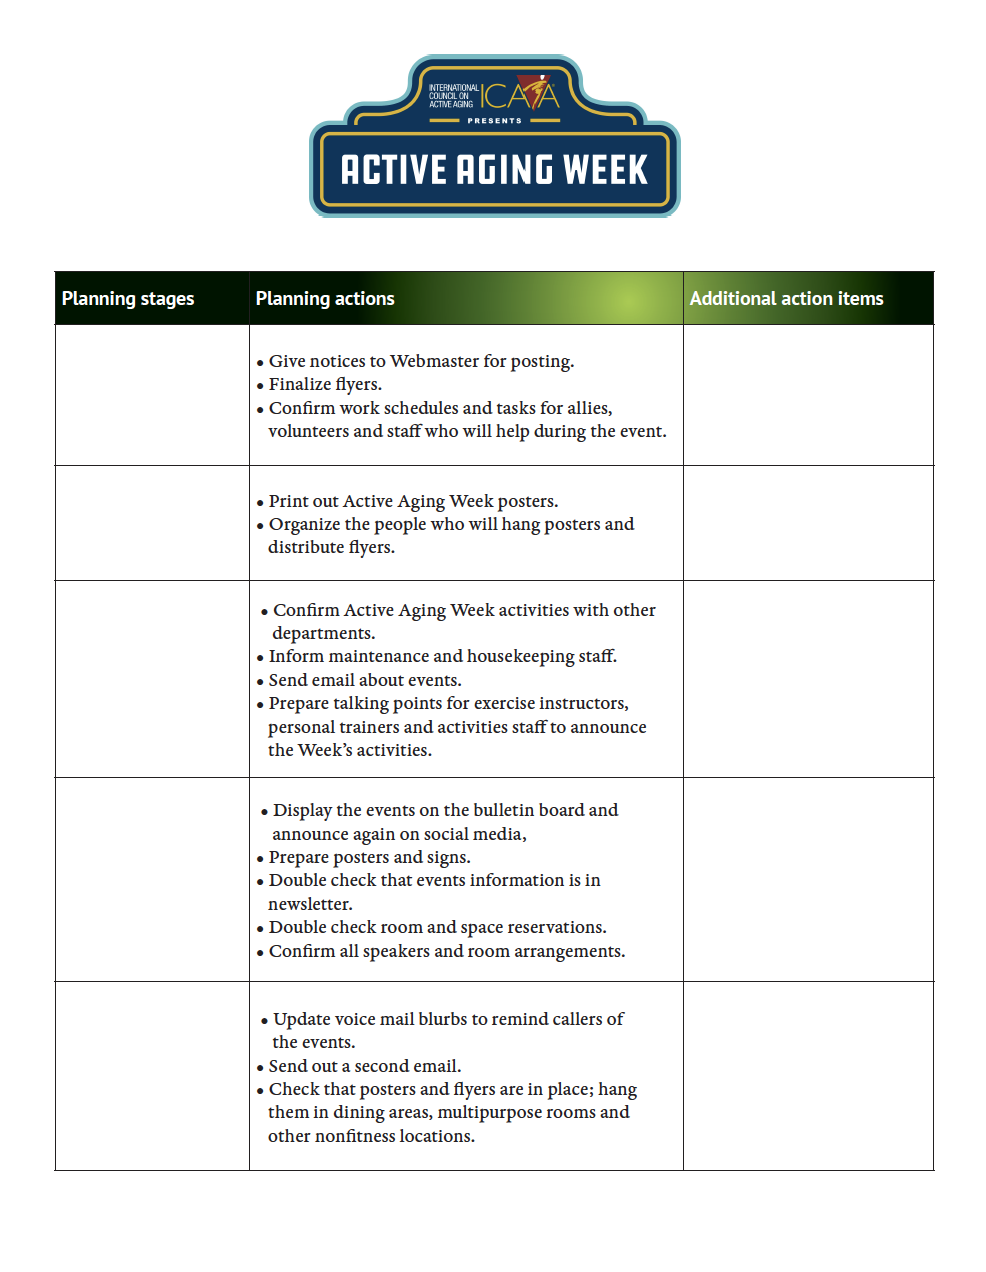 Active Aging Week planning checklist